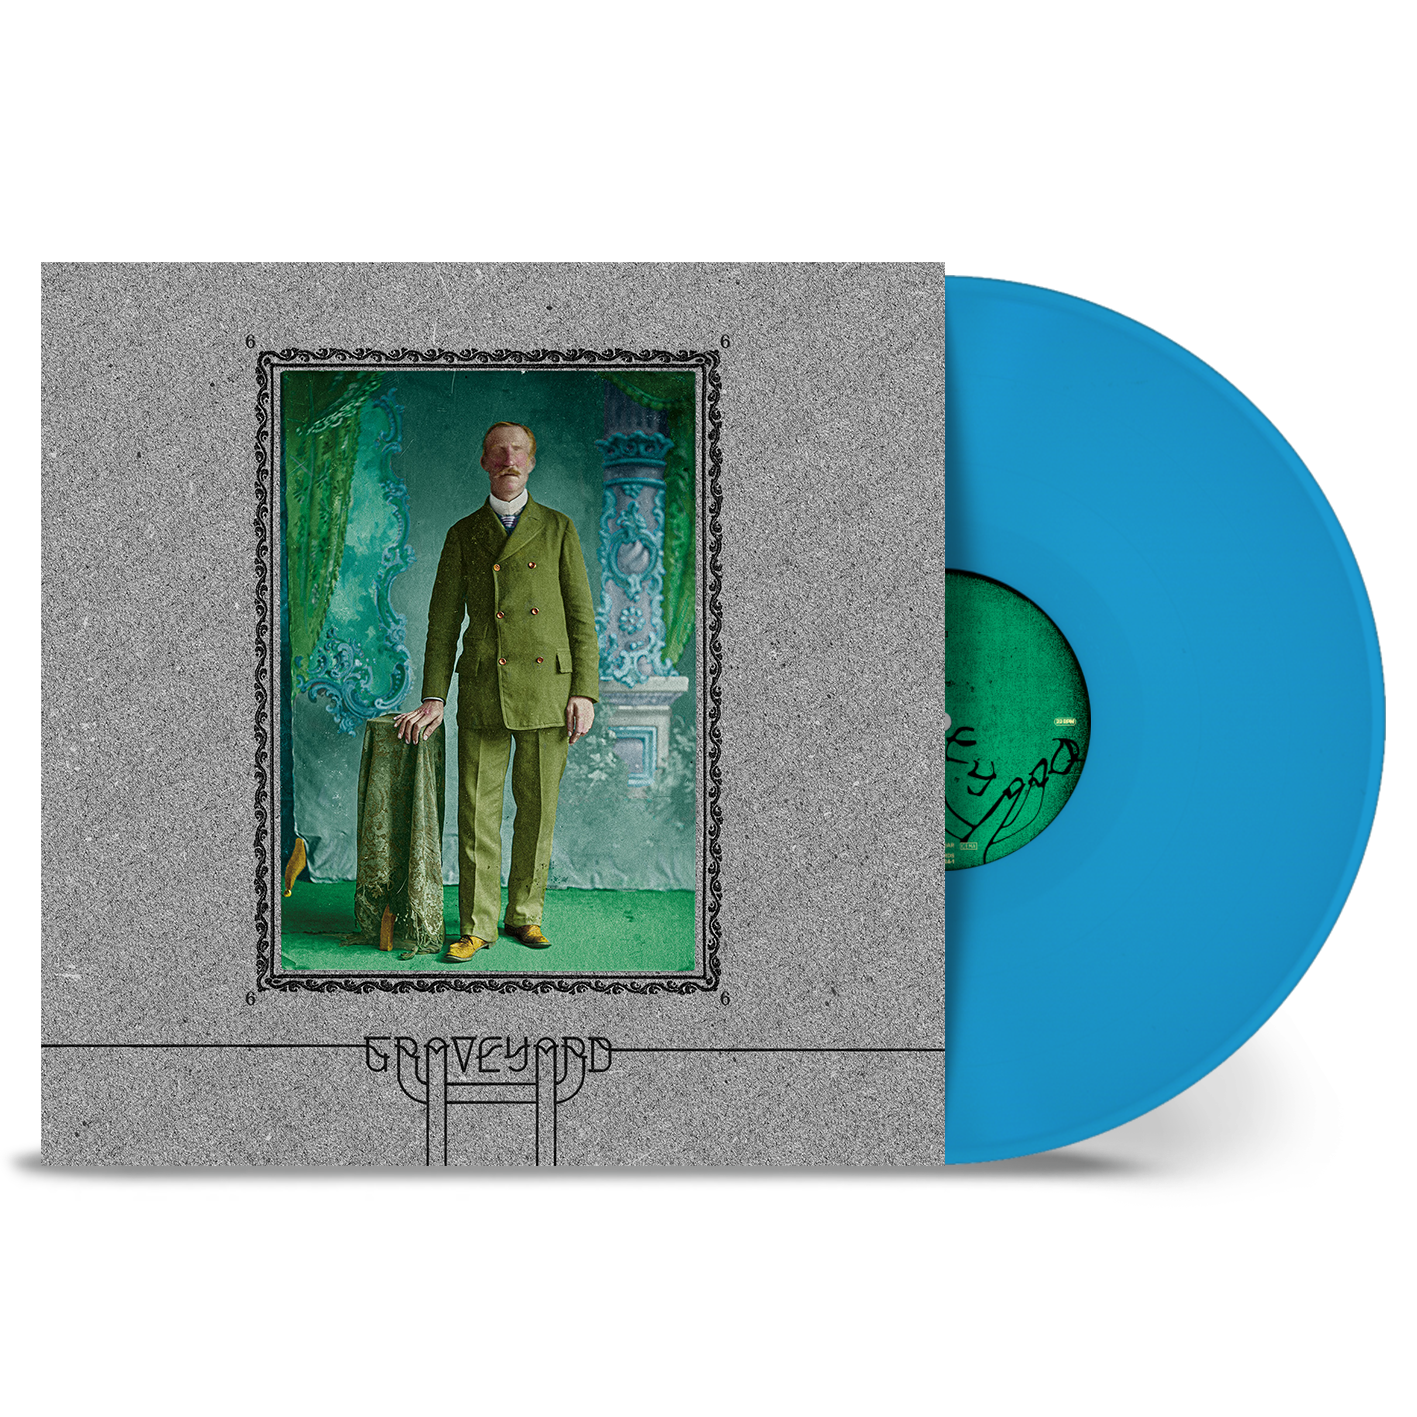 Graveyard - 6: Exclusive Sky Blue Vinyl LP